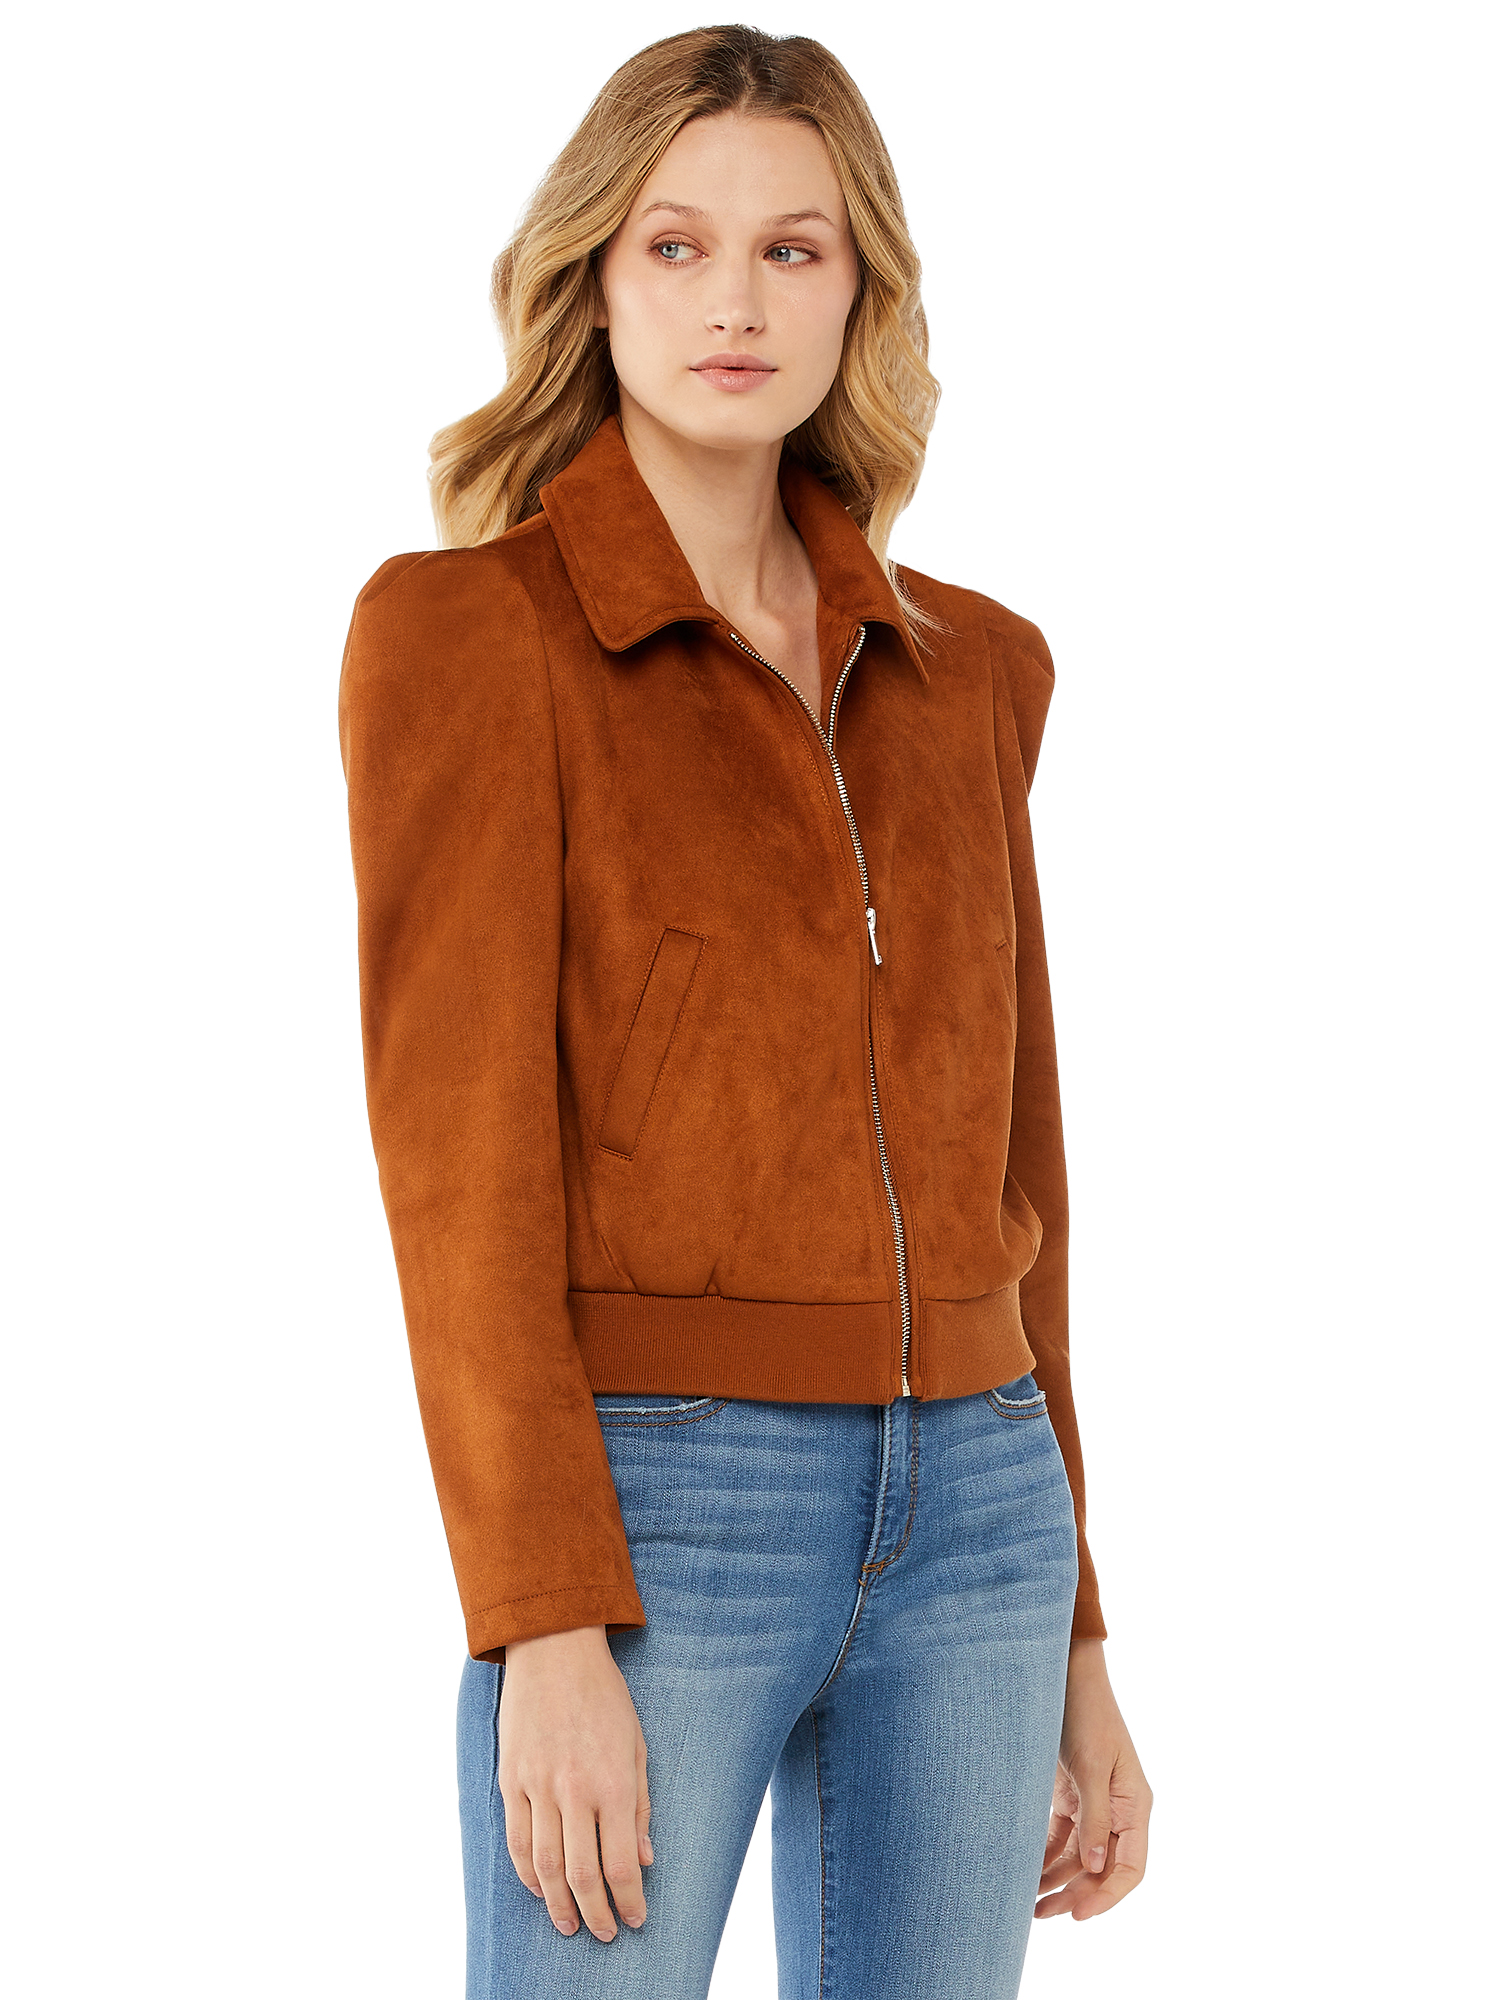 Scoop Long Sleeve Modern Fit Single-Breasted Jacket (Women's) 1 Pack - image 2 of 6